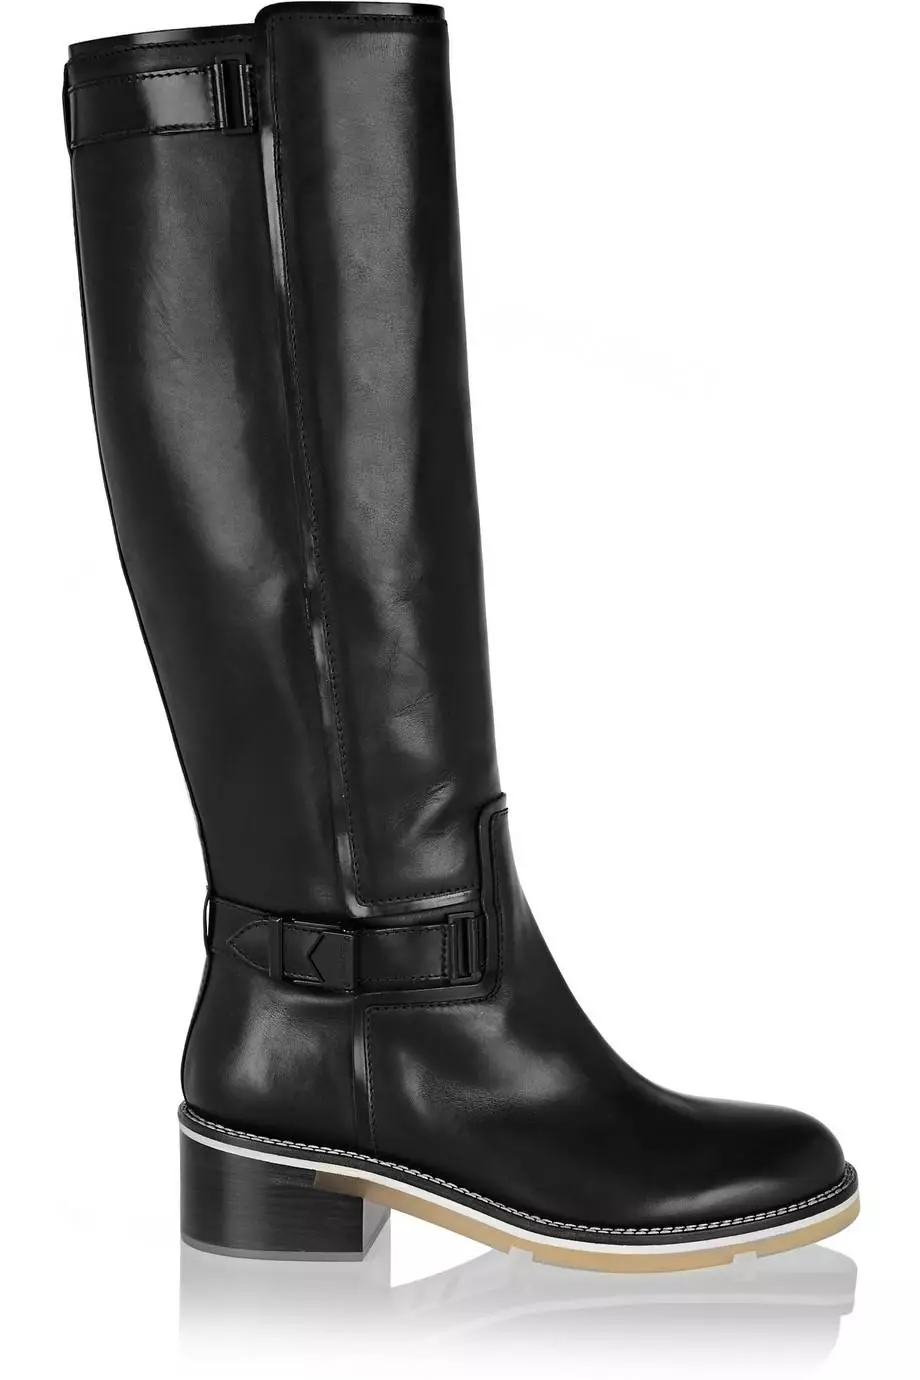 Boots Brand (62 Foto): Model Perempuan Jenama Terkenal 2250_62